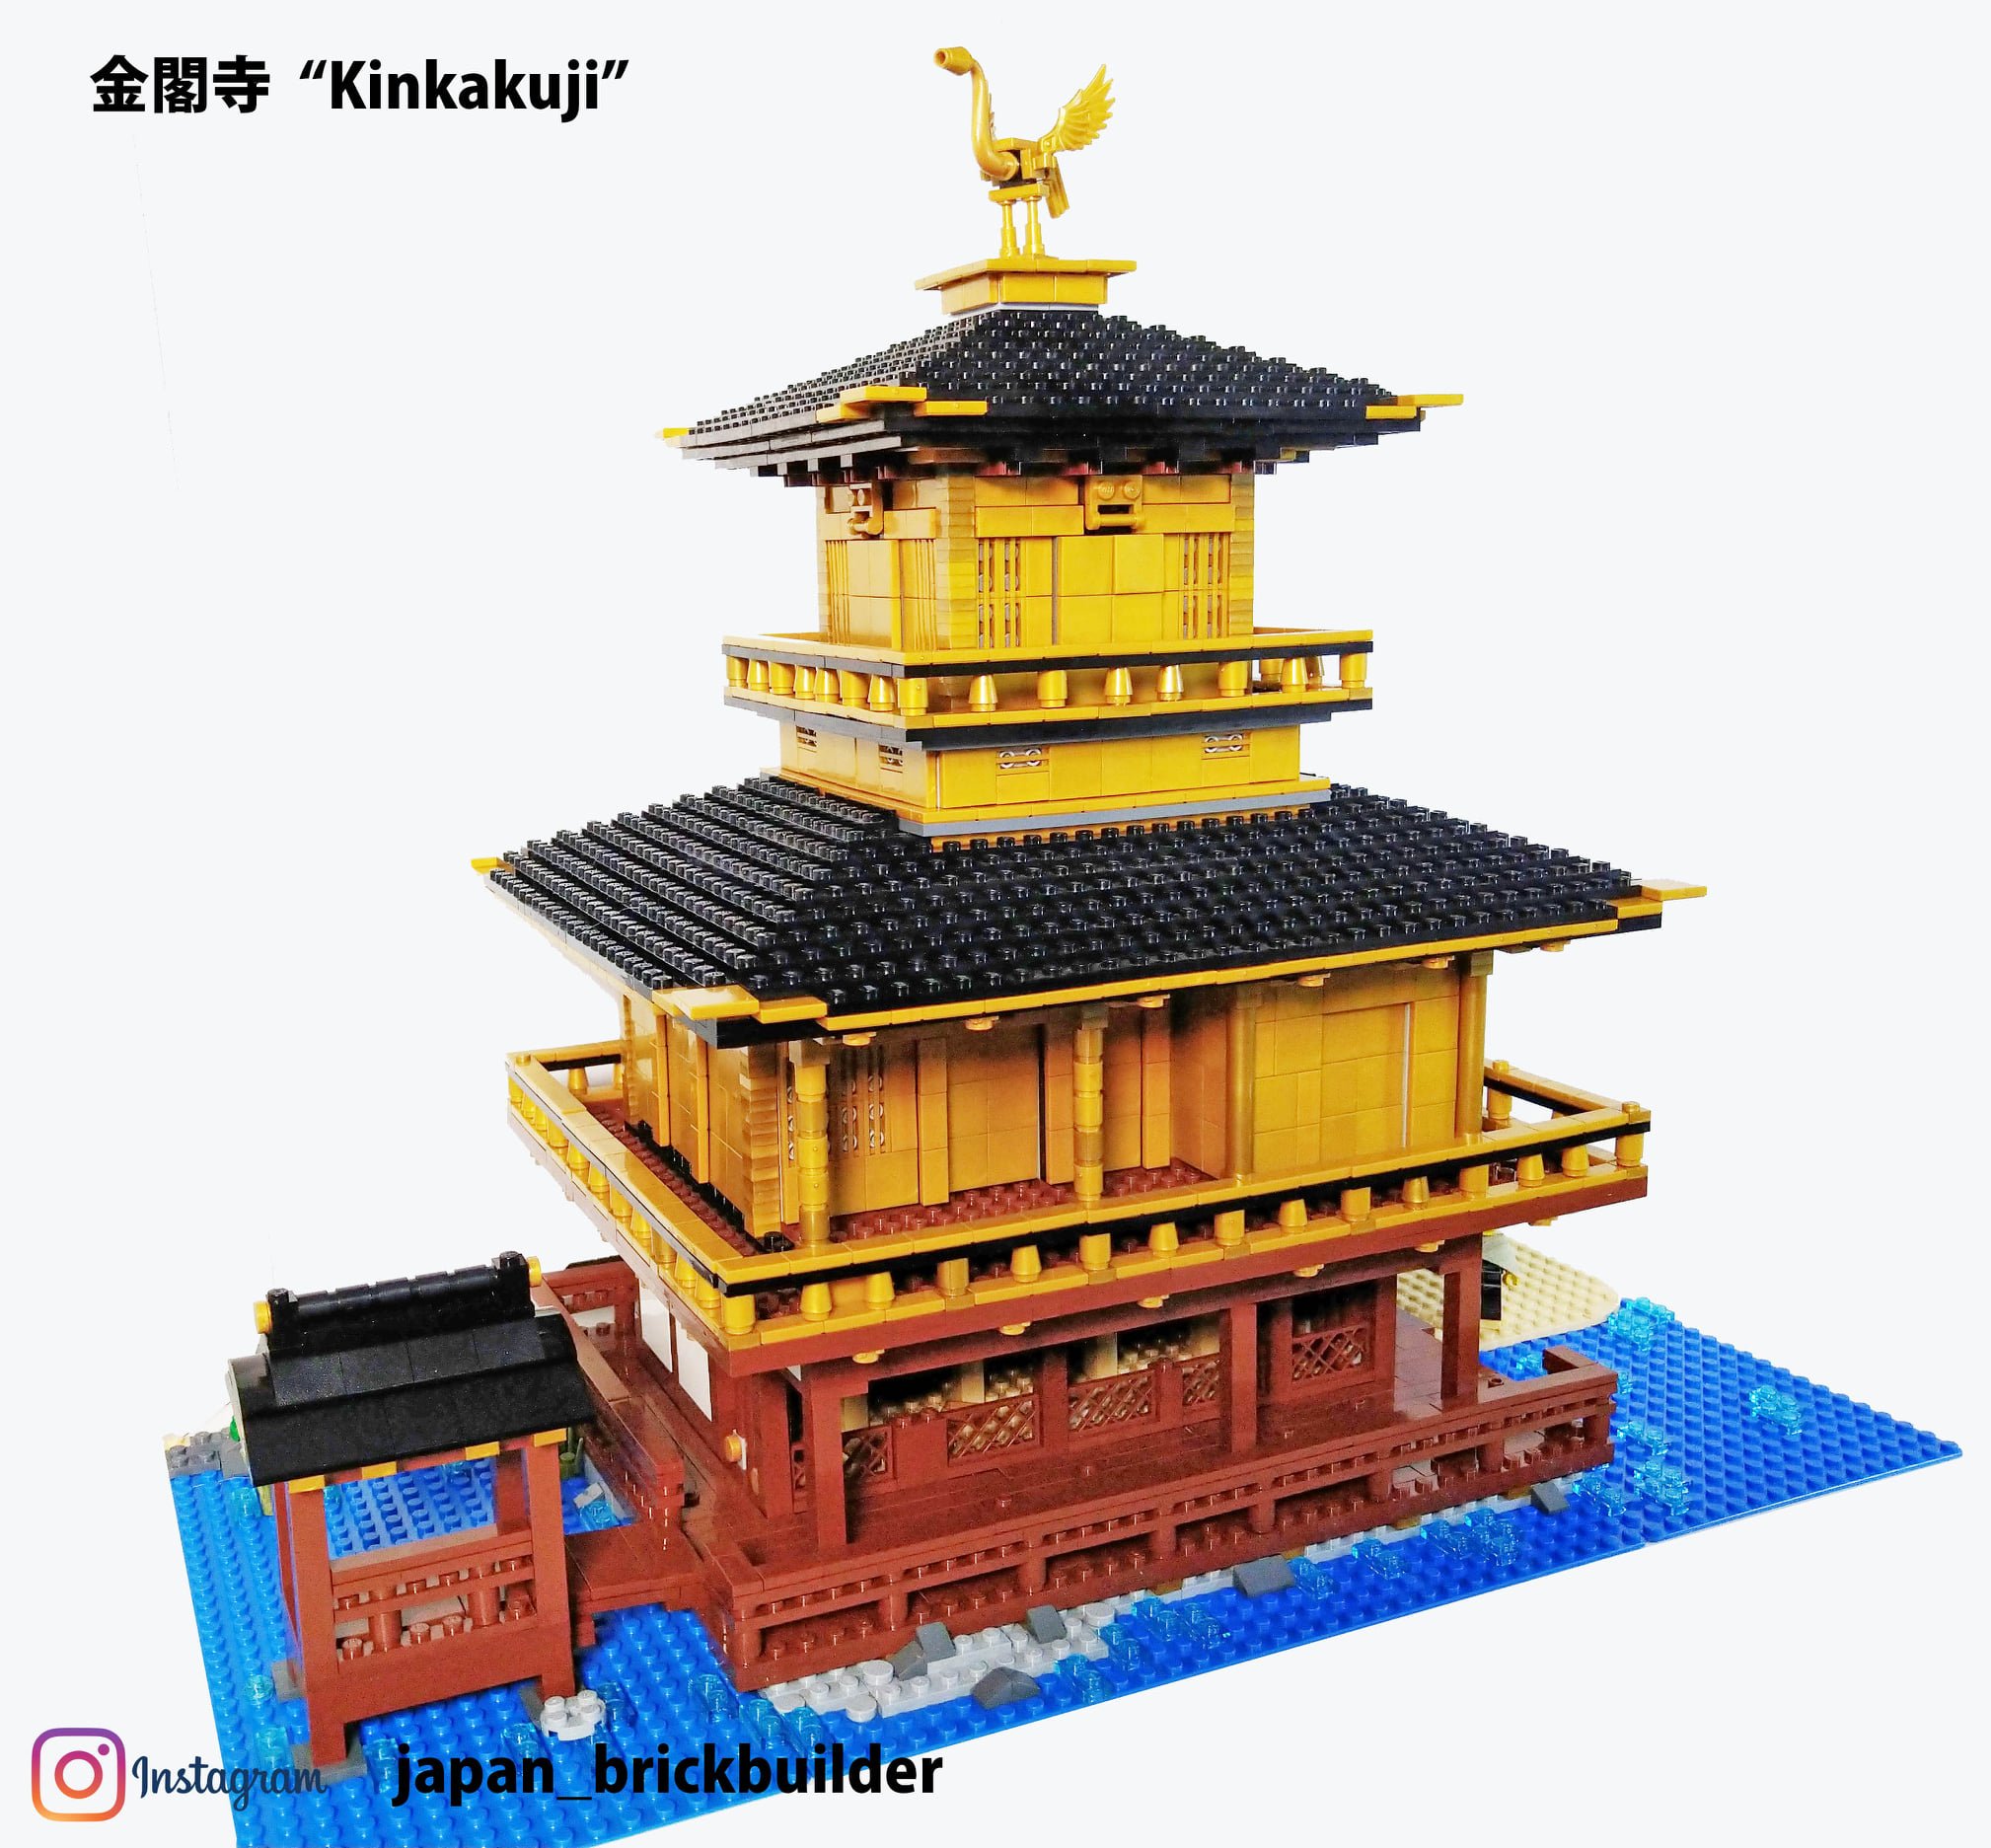 The Golden Pavilion in LEGO: Visiting Japan's Kinkaku-ji Temple - BrickNerd  - All things LEGO and the LEGO fan community